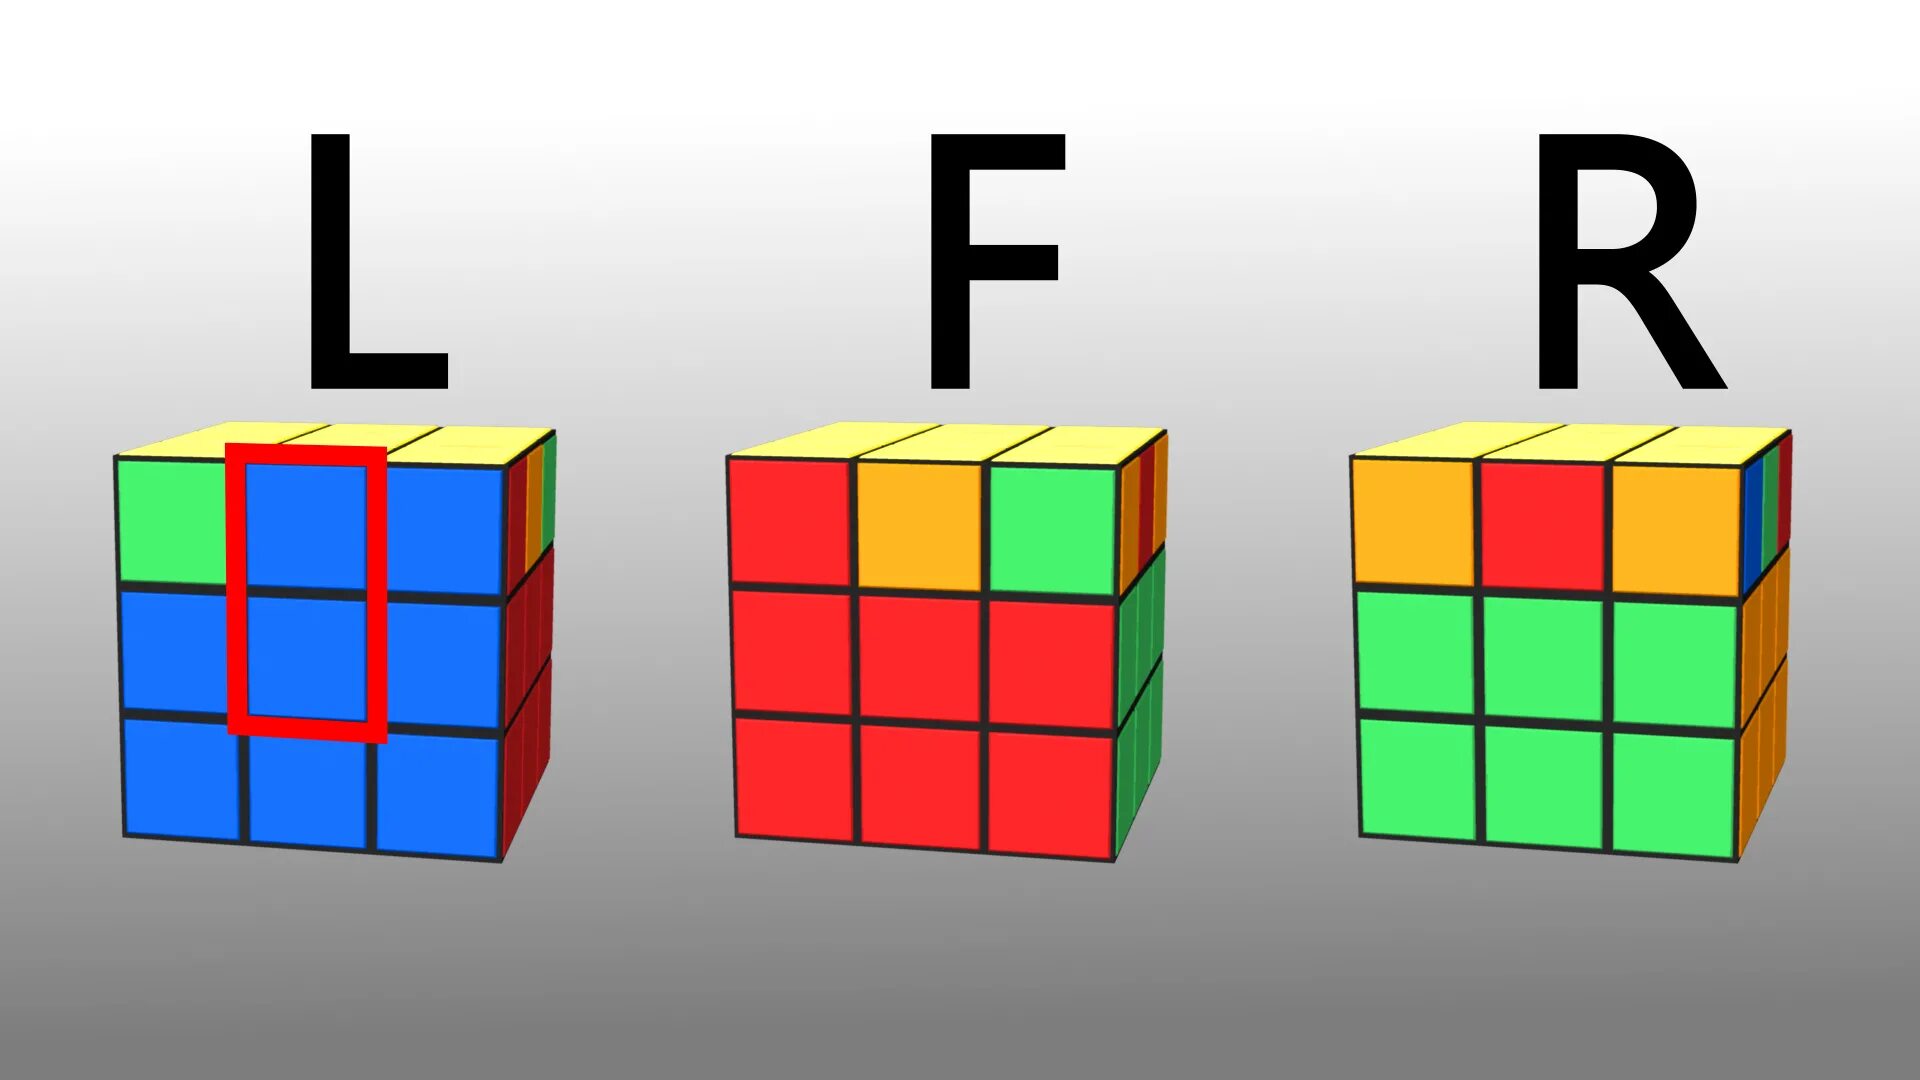 Cube solve. Алгоритм Бога для кубика Рубика. Кубик рубик алгоритм Бога. Цвета кубика Рубика 3х3. Алгоритм Бога для кубика Рубика 3х3.